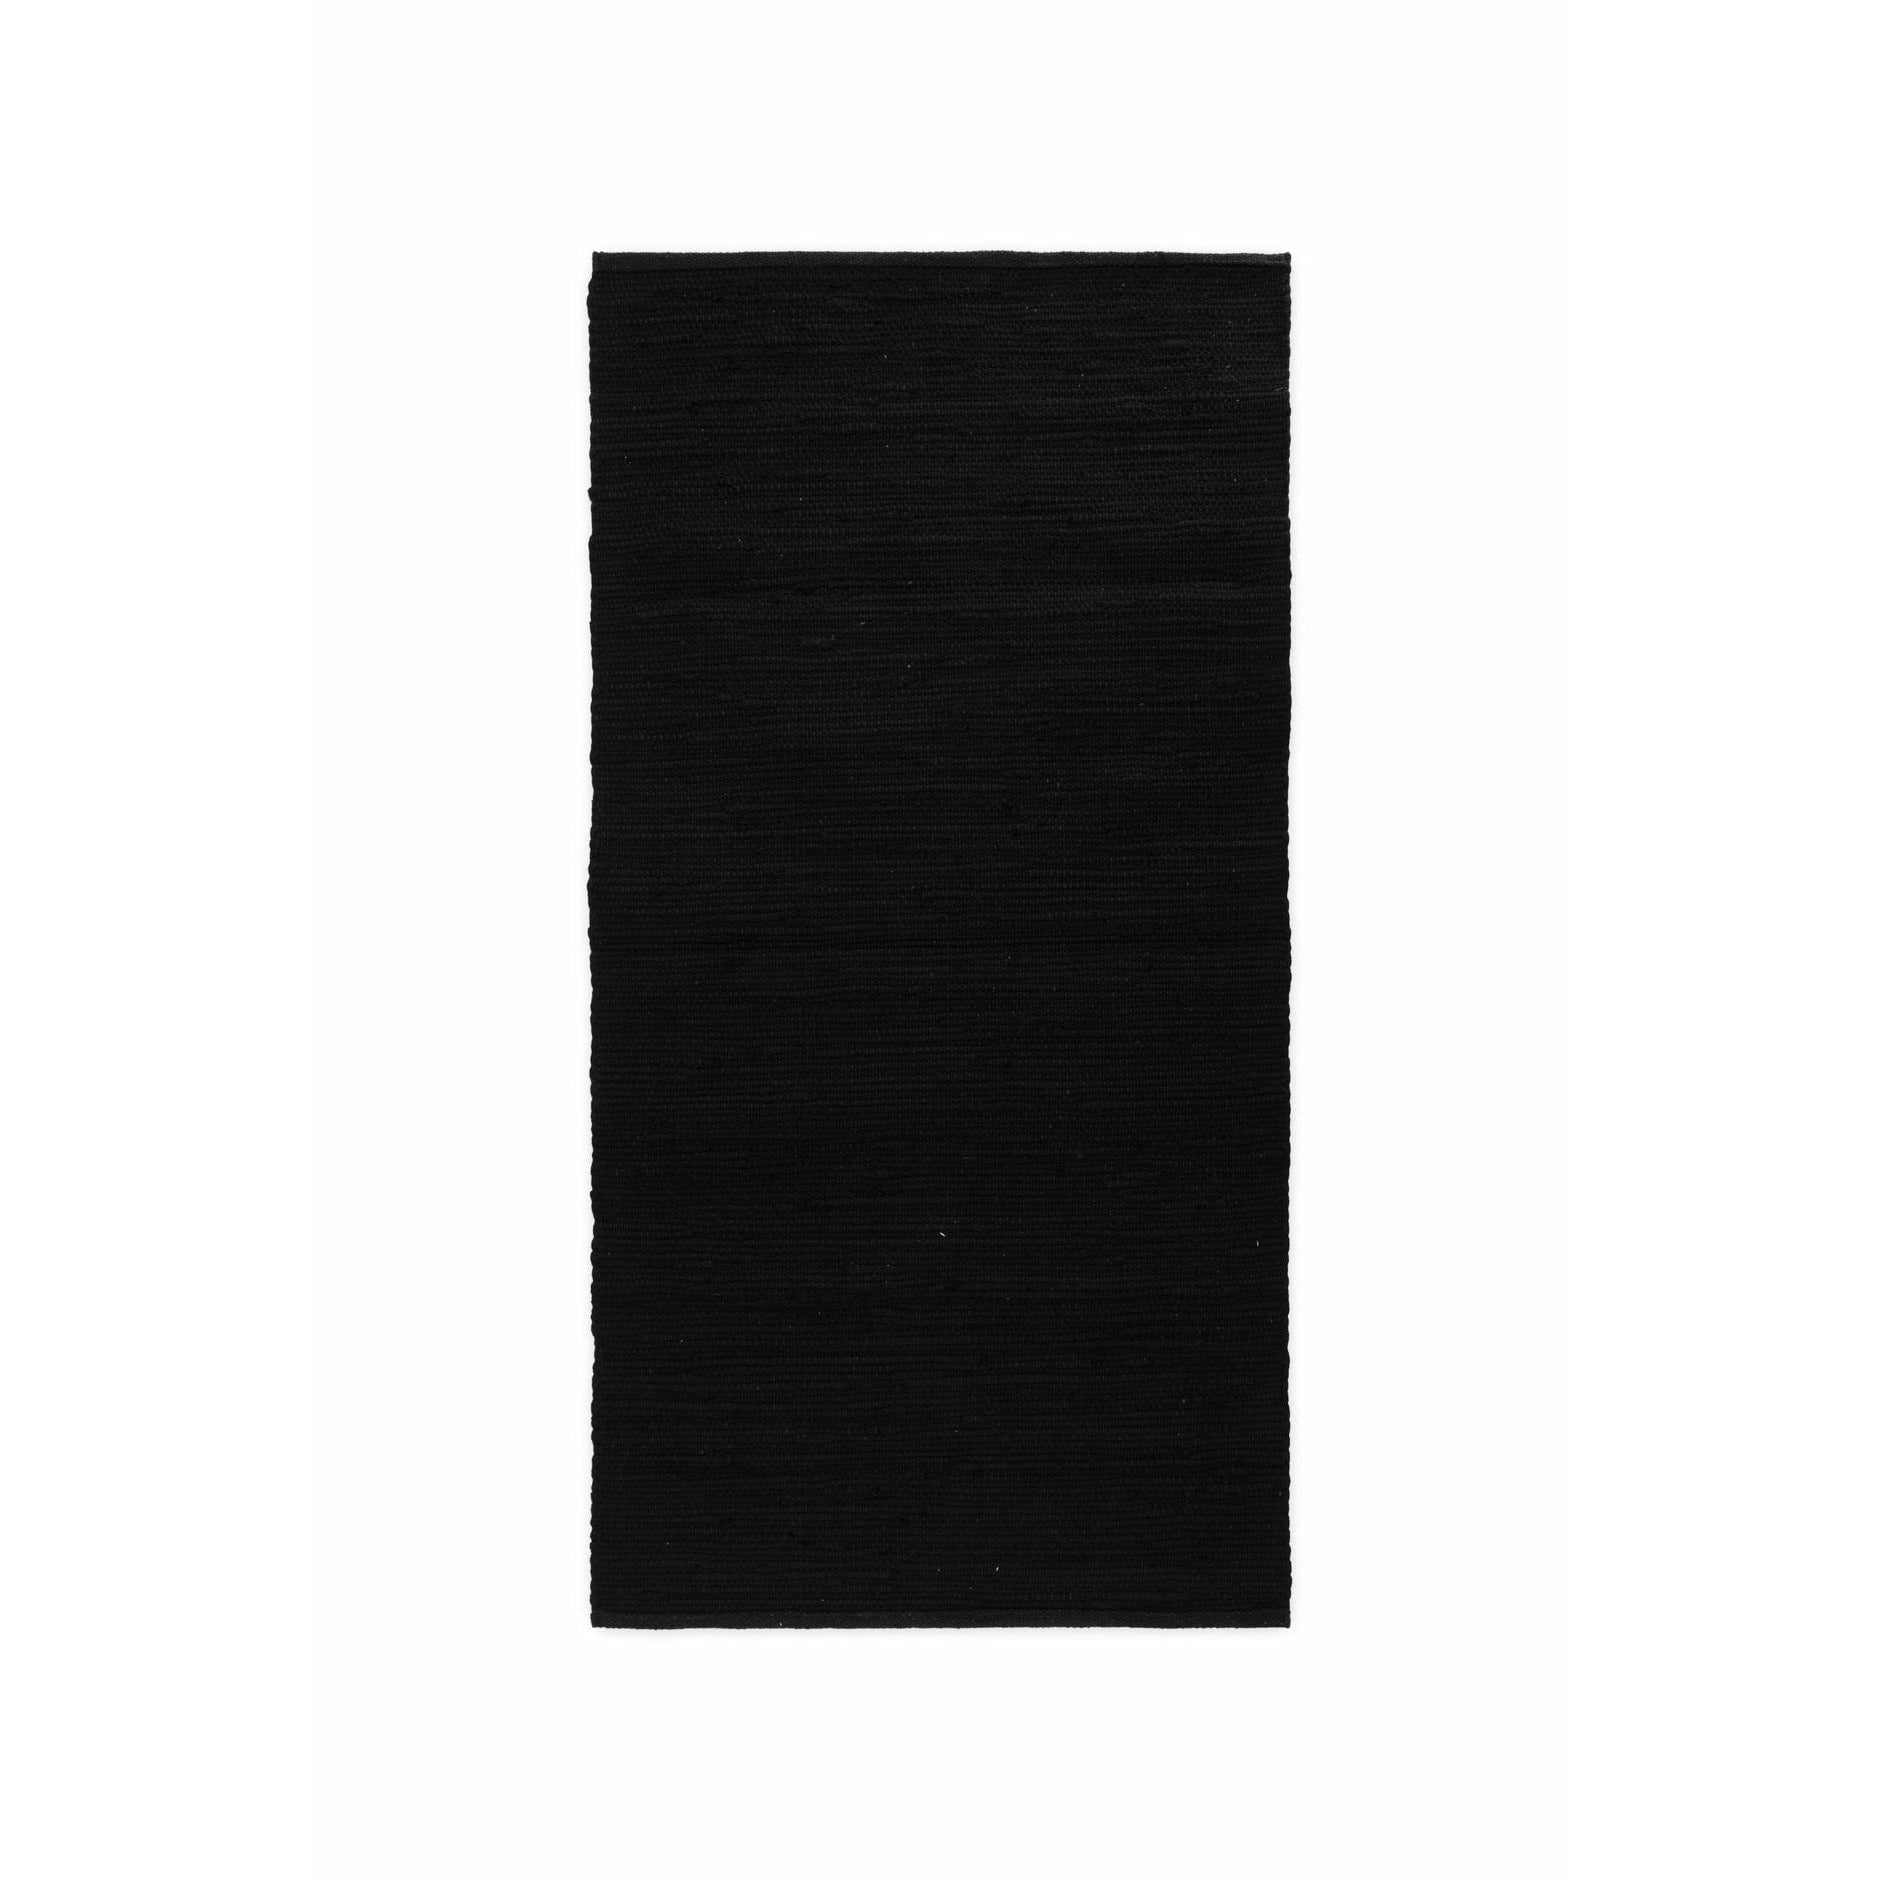 Rug Solid Bomullsmatta svart, 170 x 240 cm